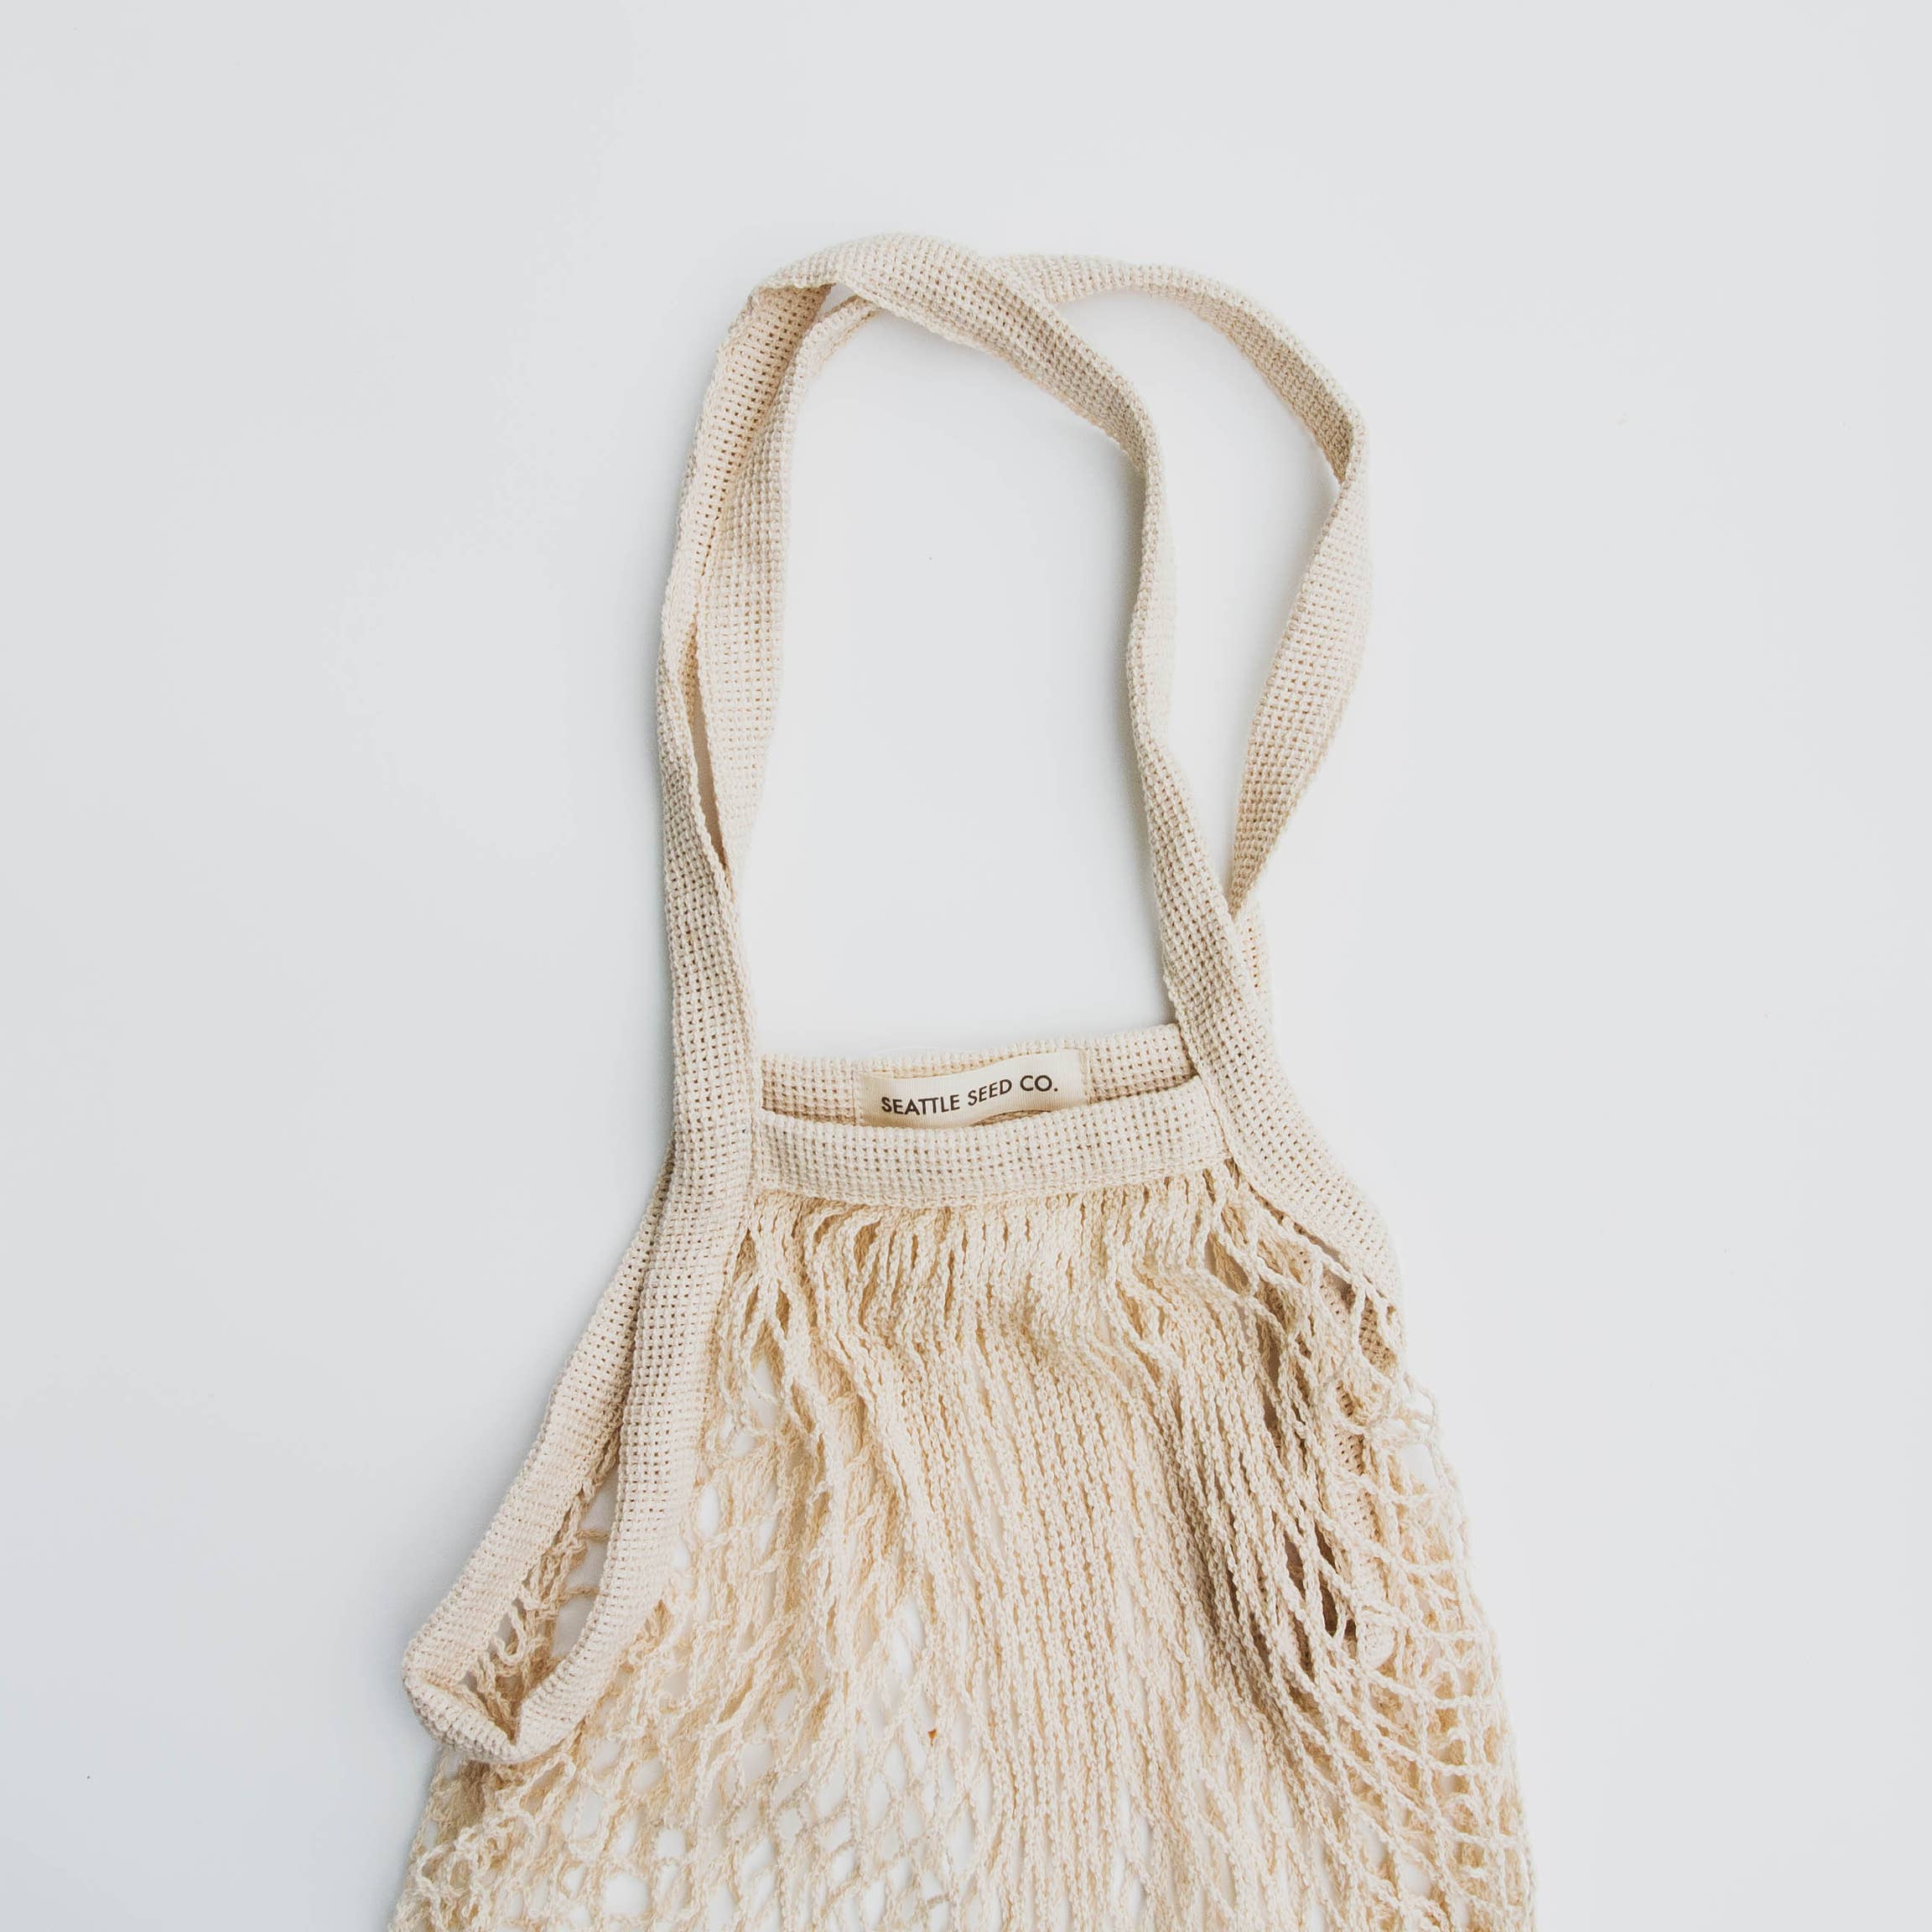 French Market Tote: Farmer's Market Cotton String Bag